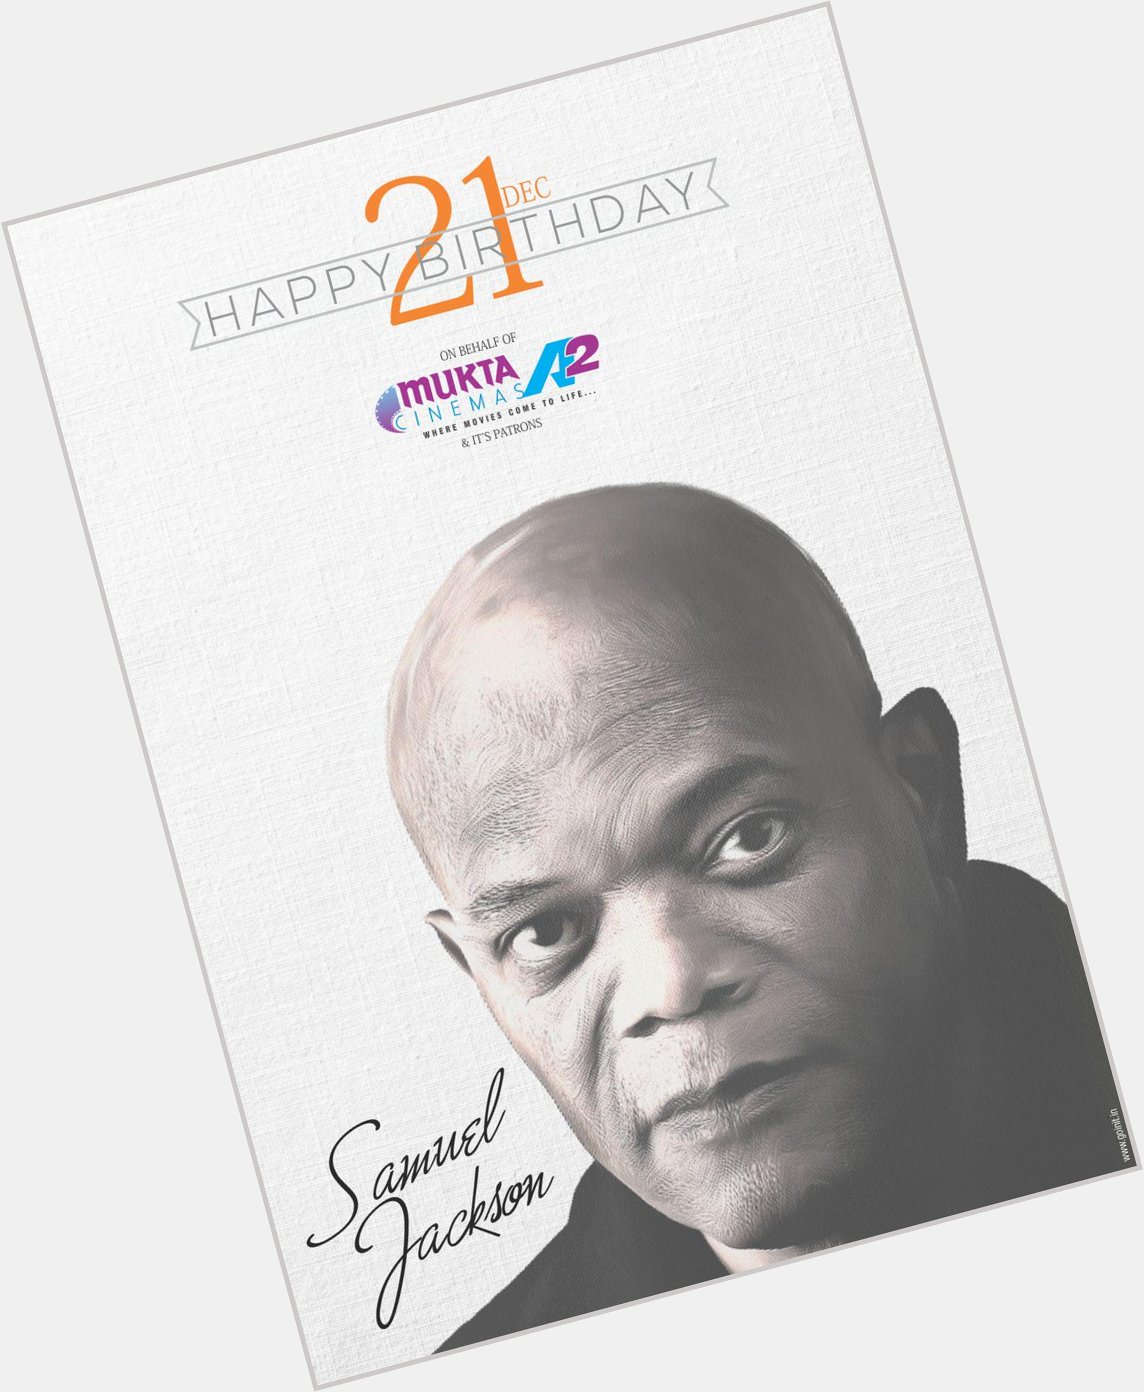 Mukta A2 Cinemas wishes Samuel L Jackson a very happy birthday! We hope all your dreams come true. 